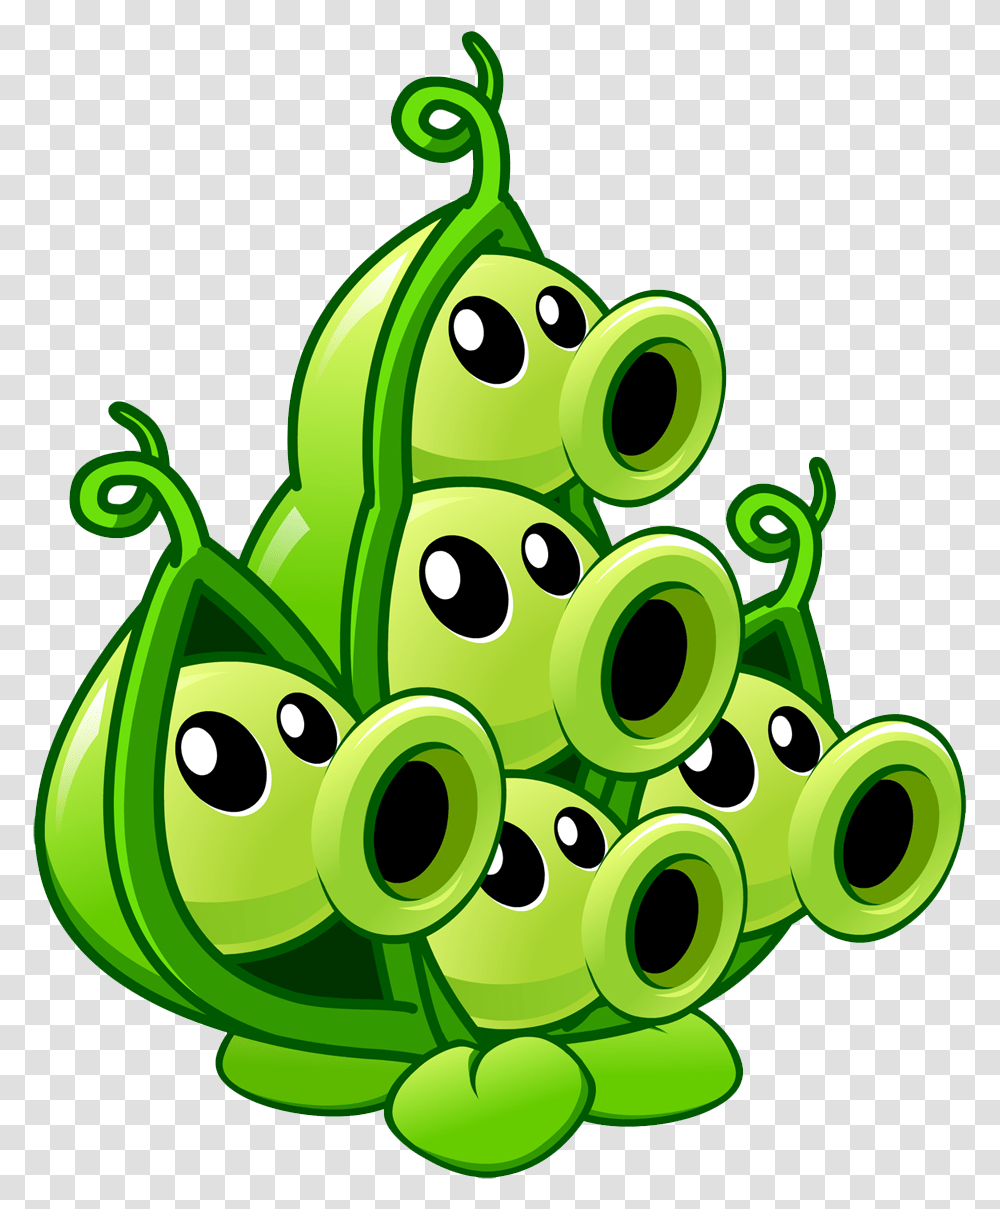 7 Jpg Plants Vs Zombies 2 Pea Pod, Green, Toy Transparent Png